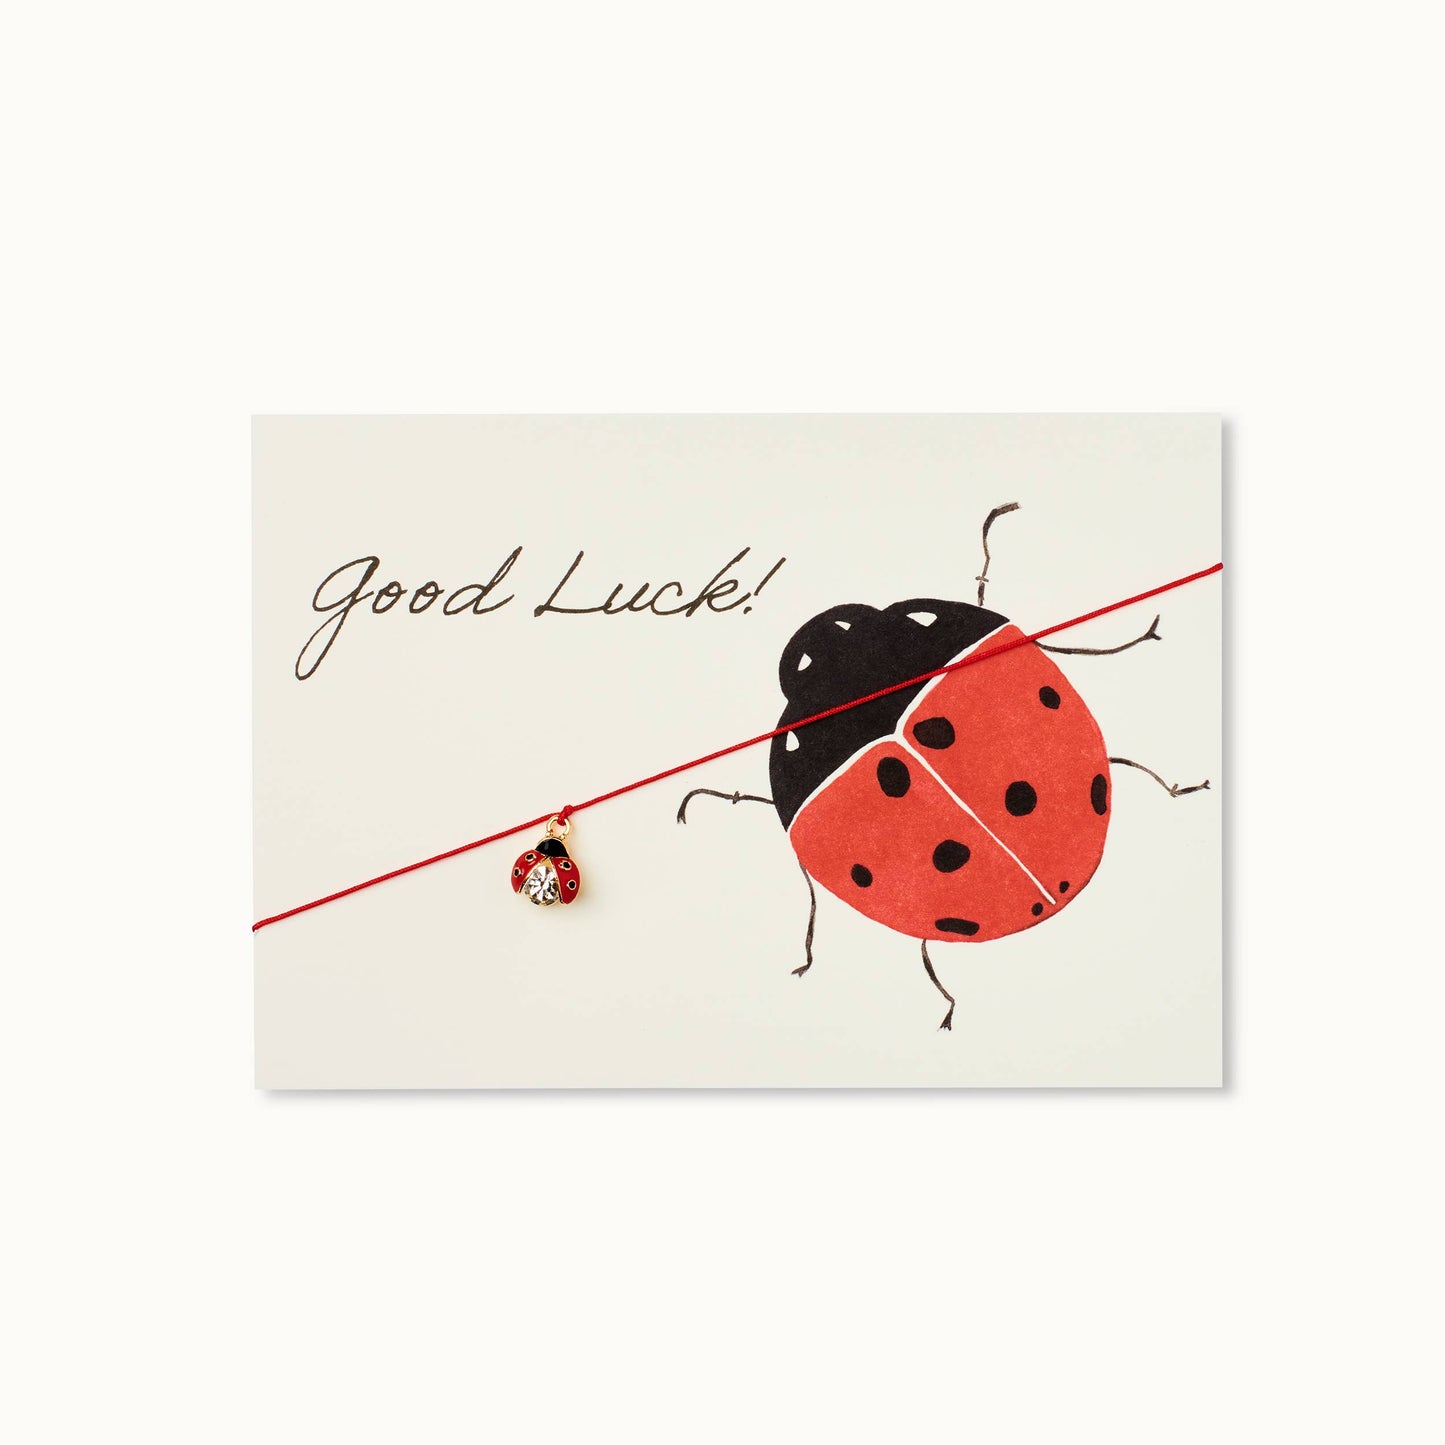 Bracelet Card: Good Luck!- Ladybug - Grußkarten - Who said